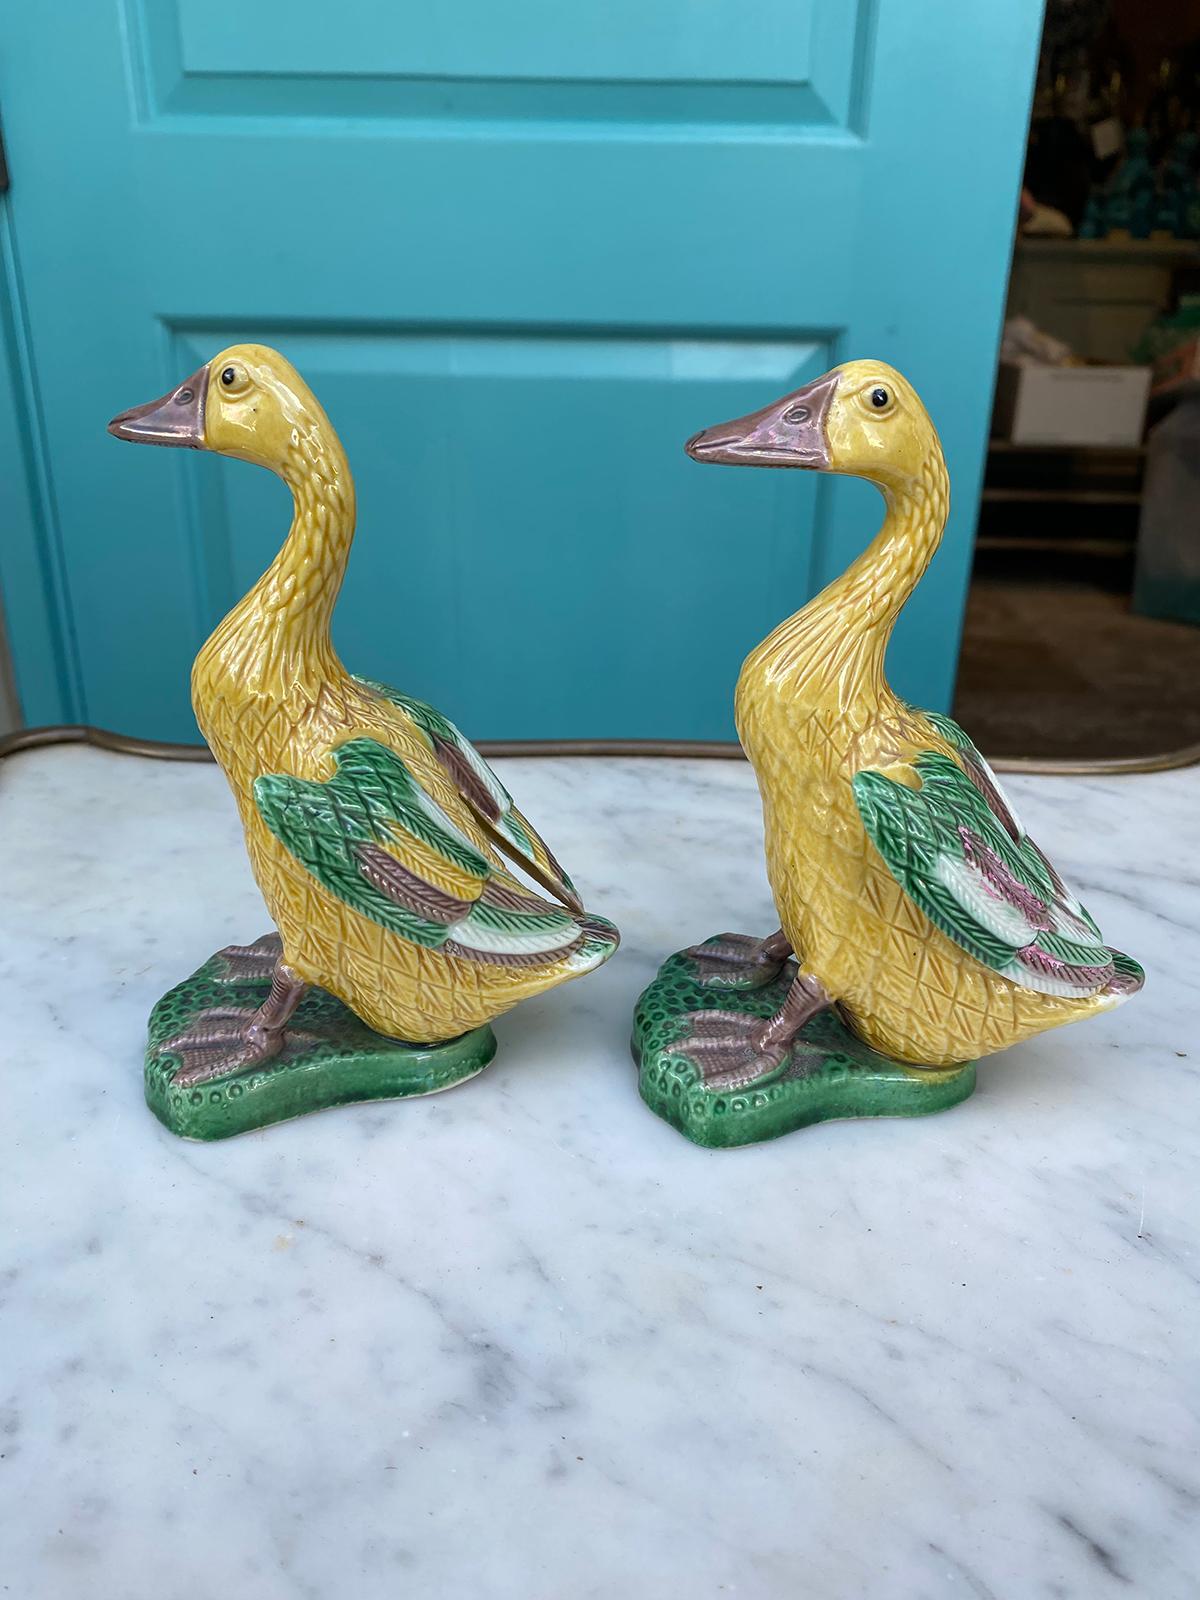 Pair of Early 20th Century Chinese Glazed Ceramic Yellow Ducks, 1 Marked China 1